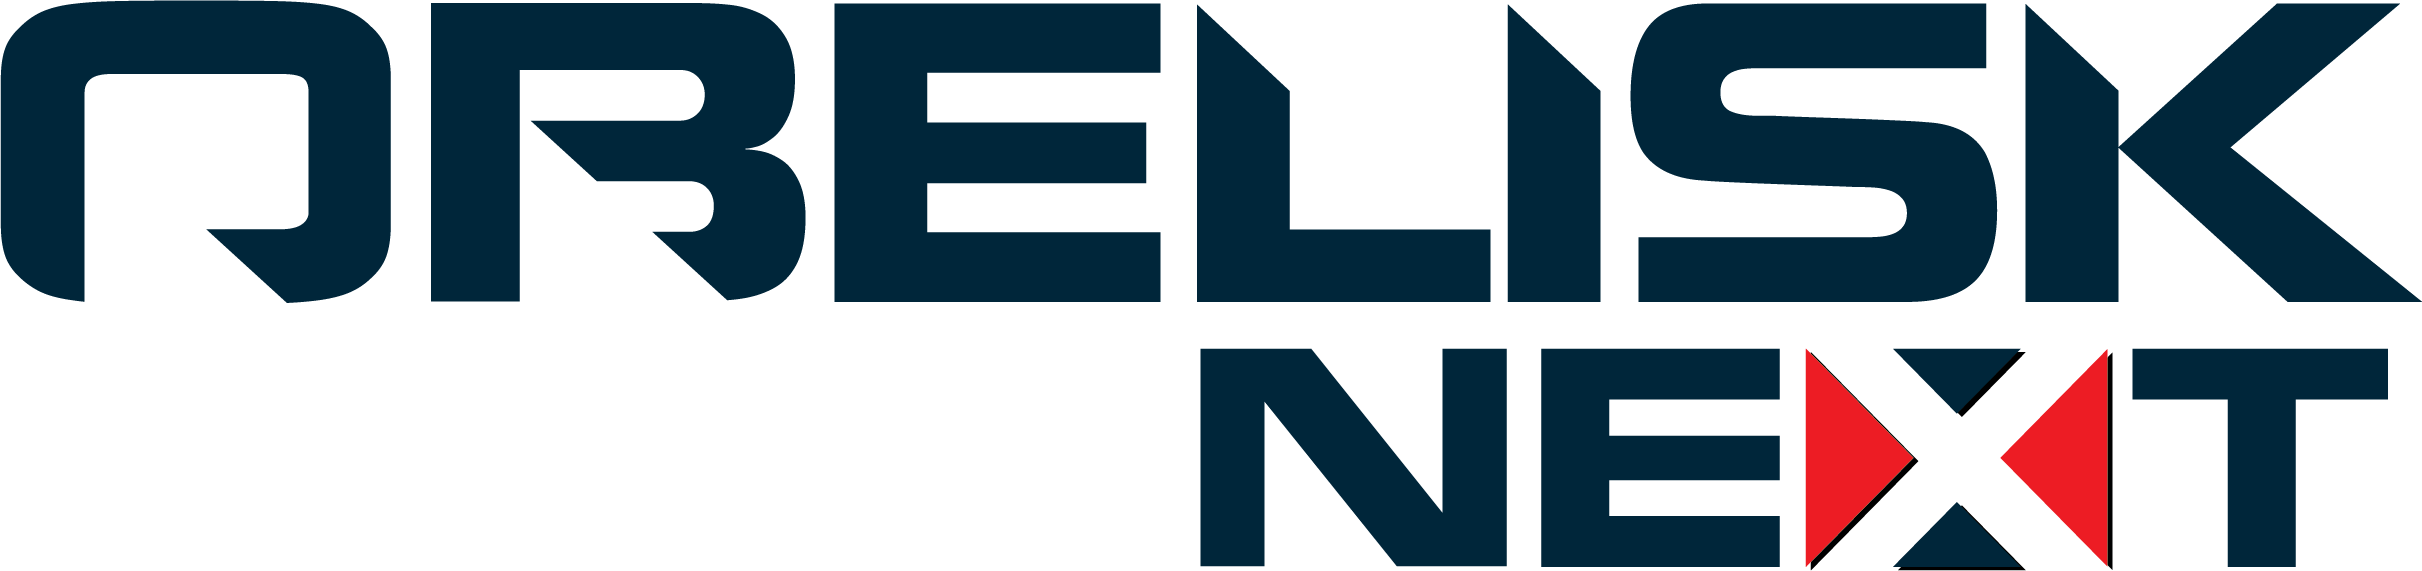 Obelisk logo